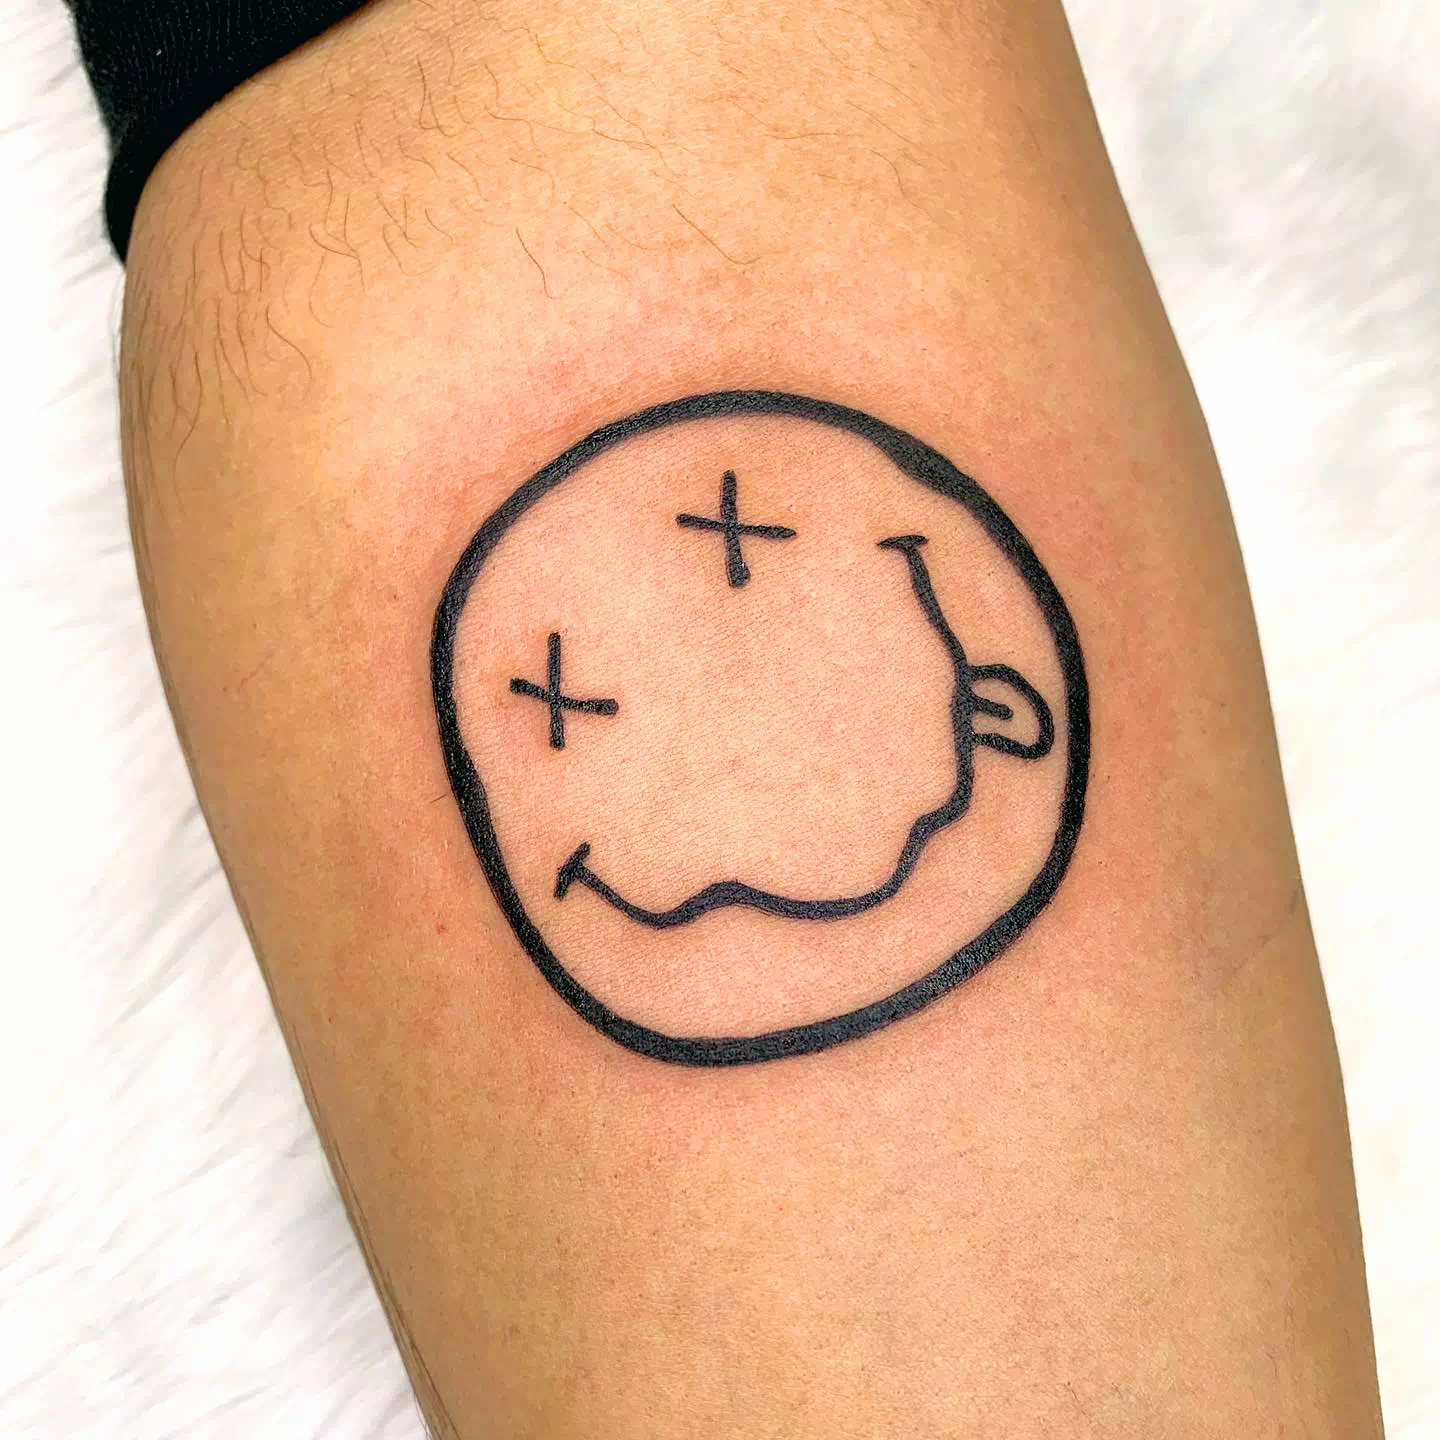 Diseños de tatuajes de logos de grupos de música famosos 1